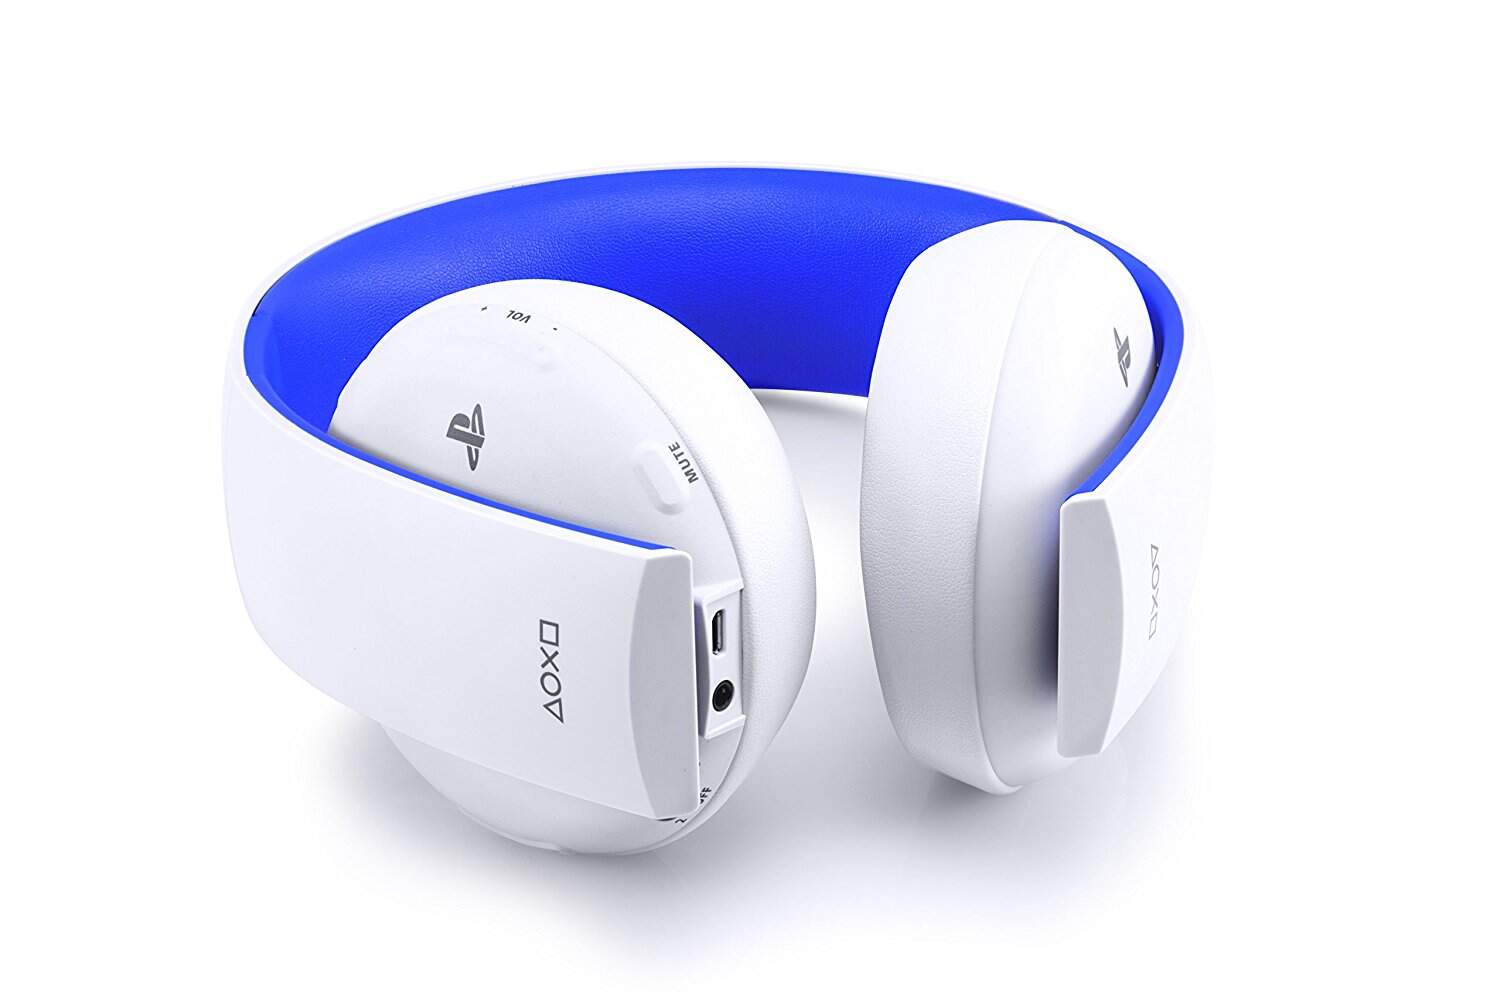 sony wireless stereo headset 2.0